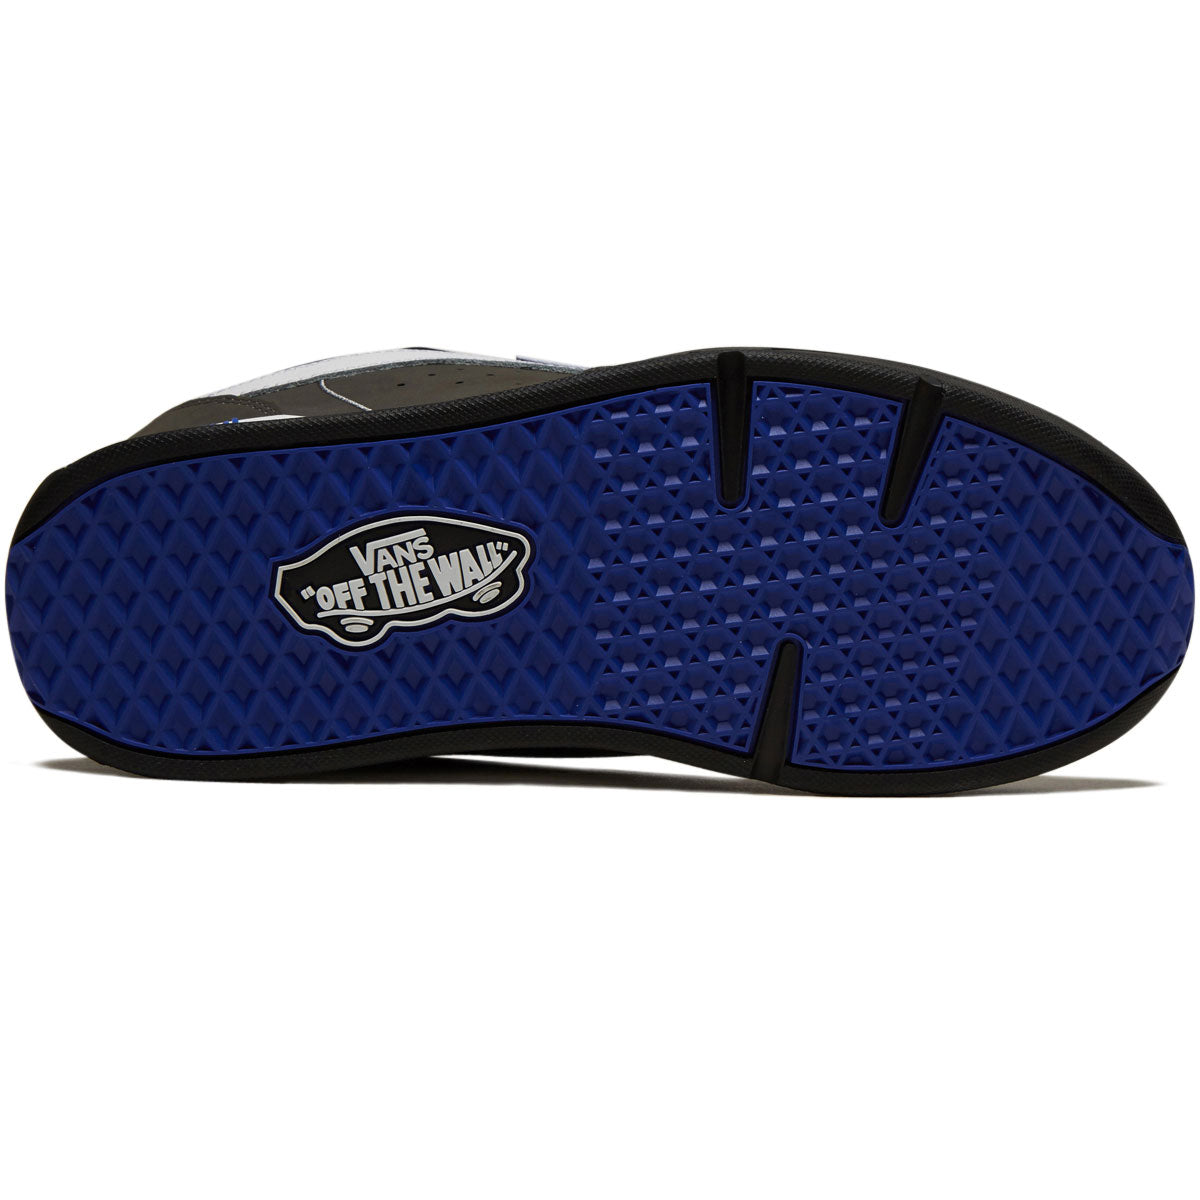 Vans Rowley XLT Shoes - Grey/Blue image 4